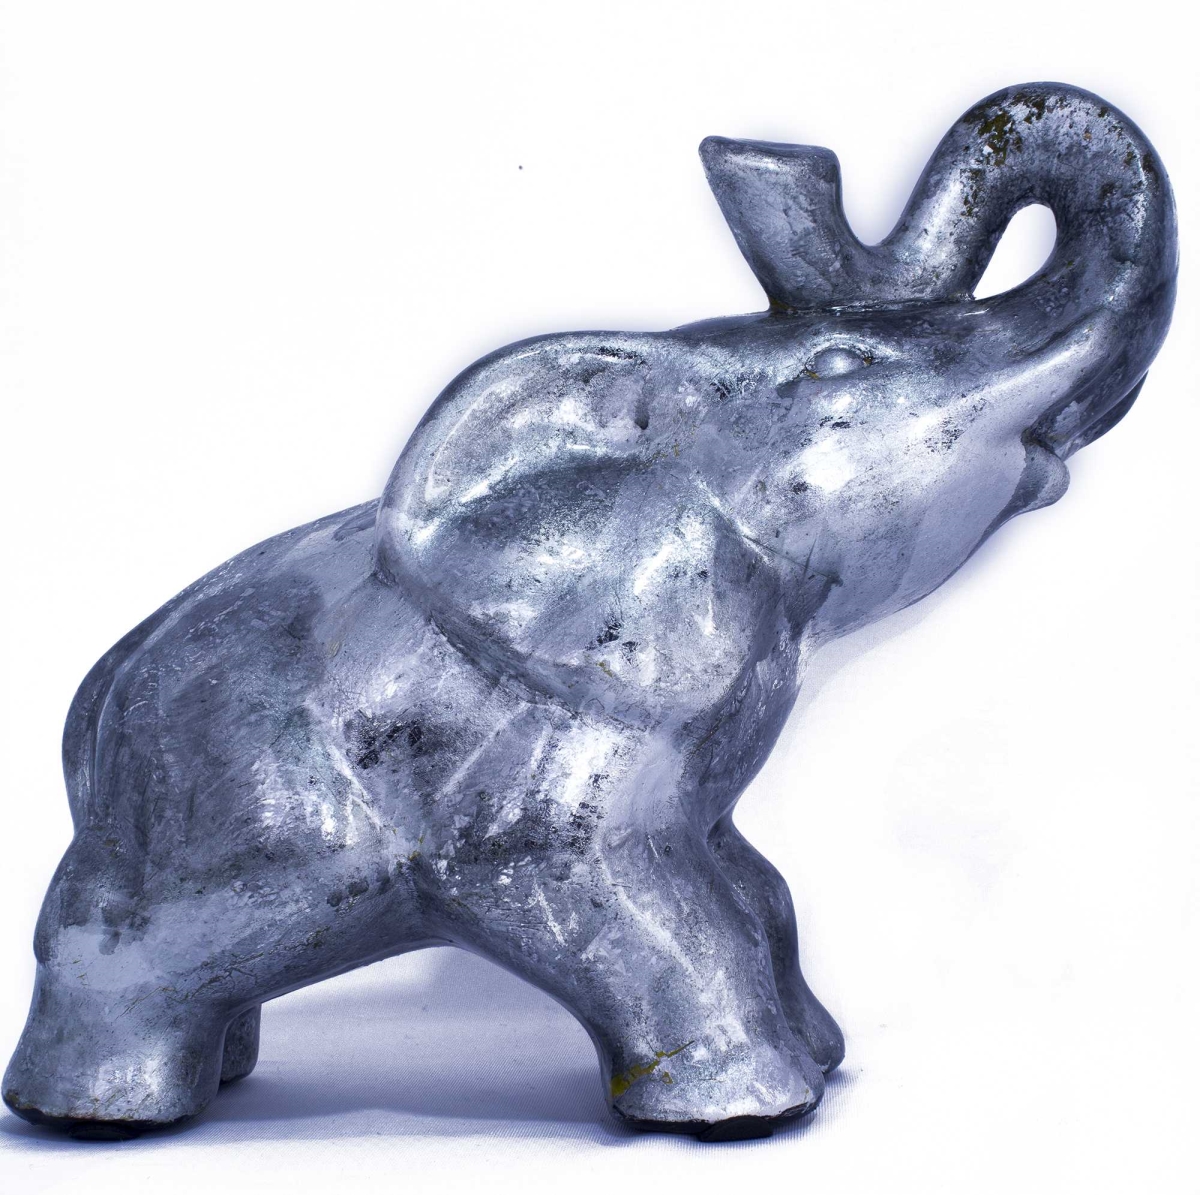 319661 10 In. Decorative Ceramic Elephant - Silver